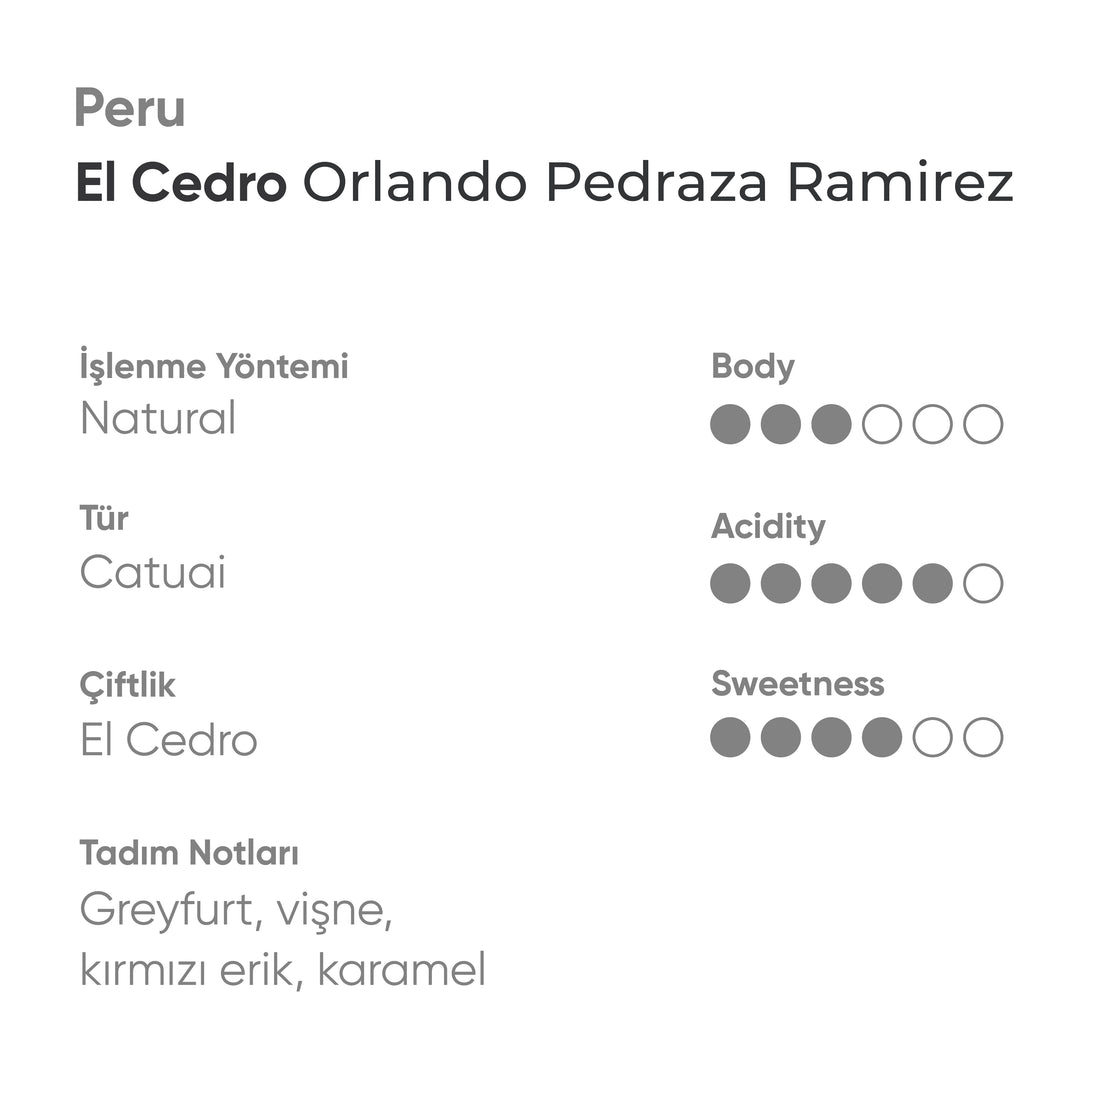 Peru El Cedro Orlando Pedraza Ramirez